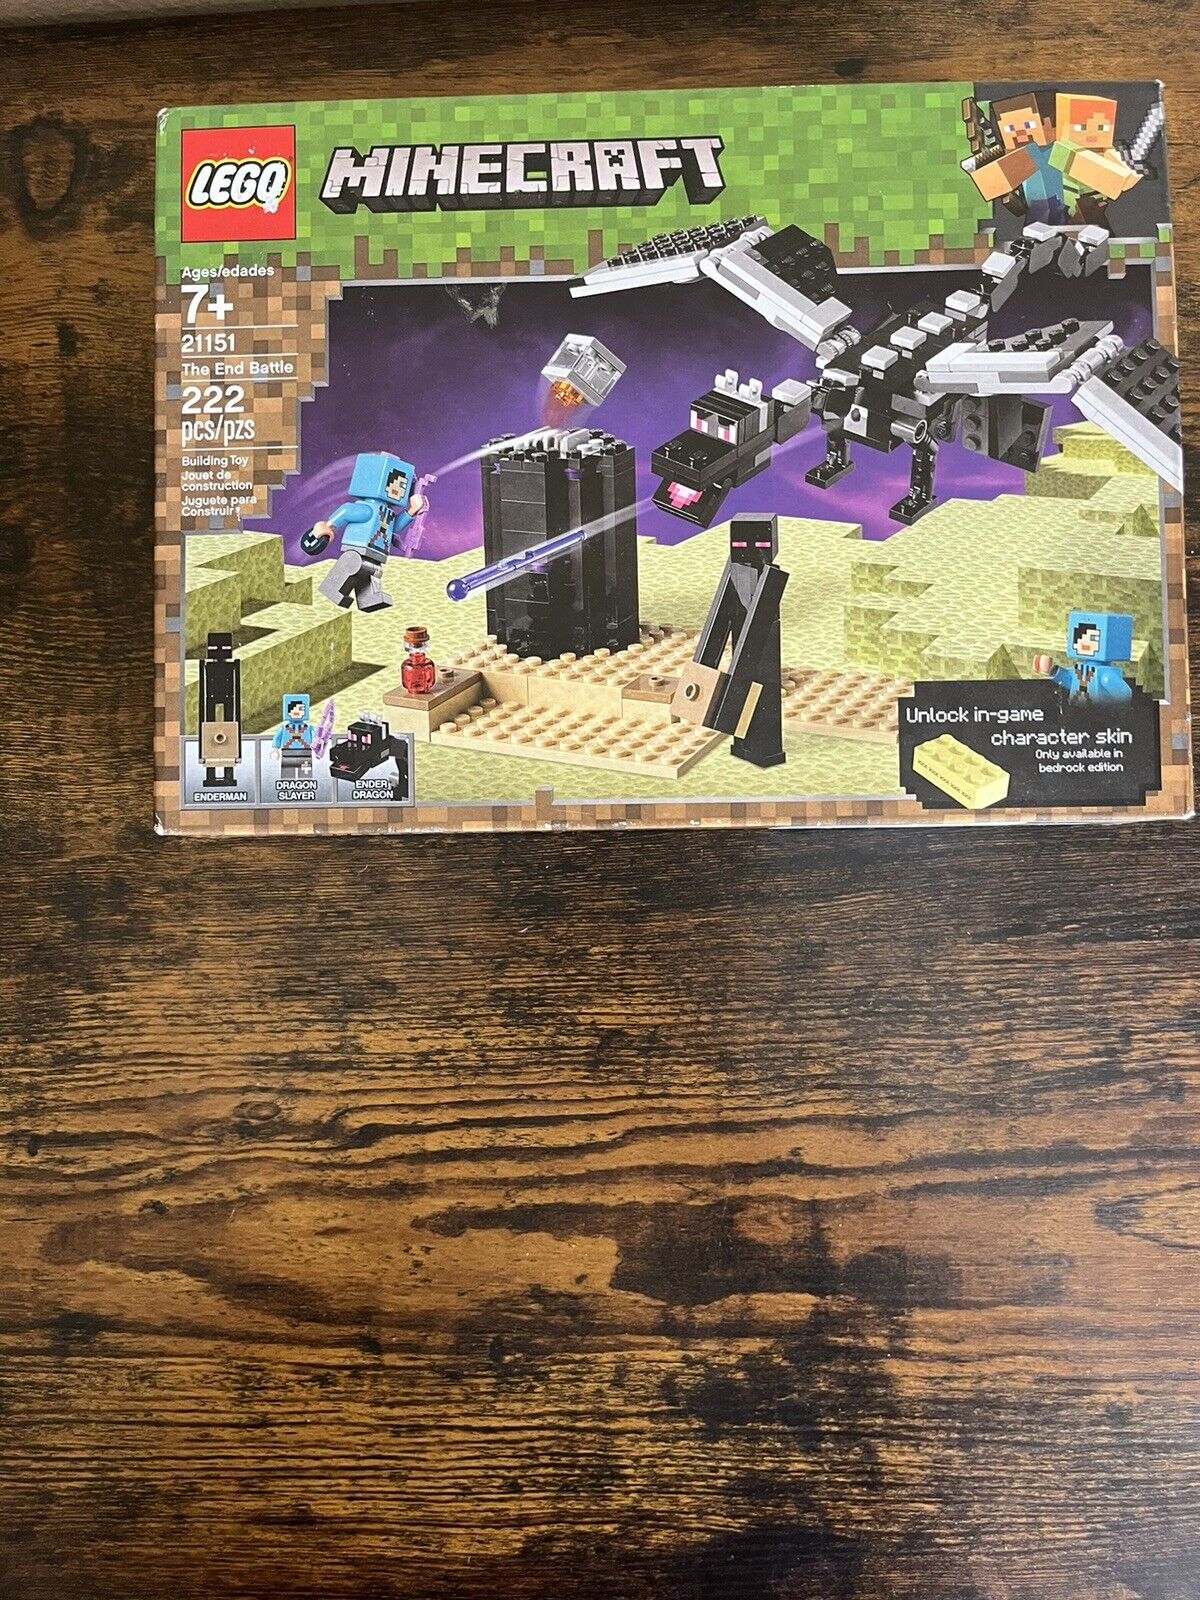 LEGO Minecraft: The End Battle (21151) Ender Dragon Slayer Enderman BOX DAMAGE